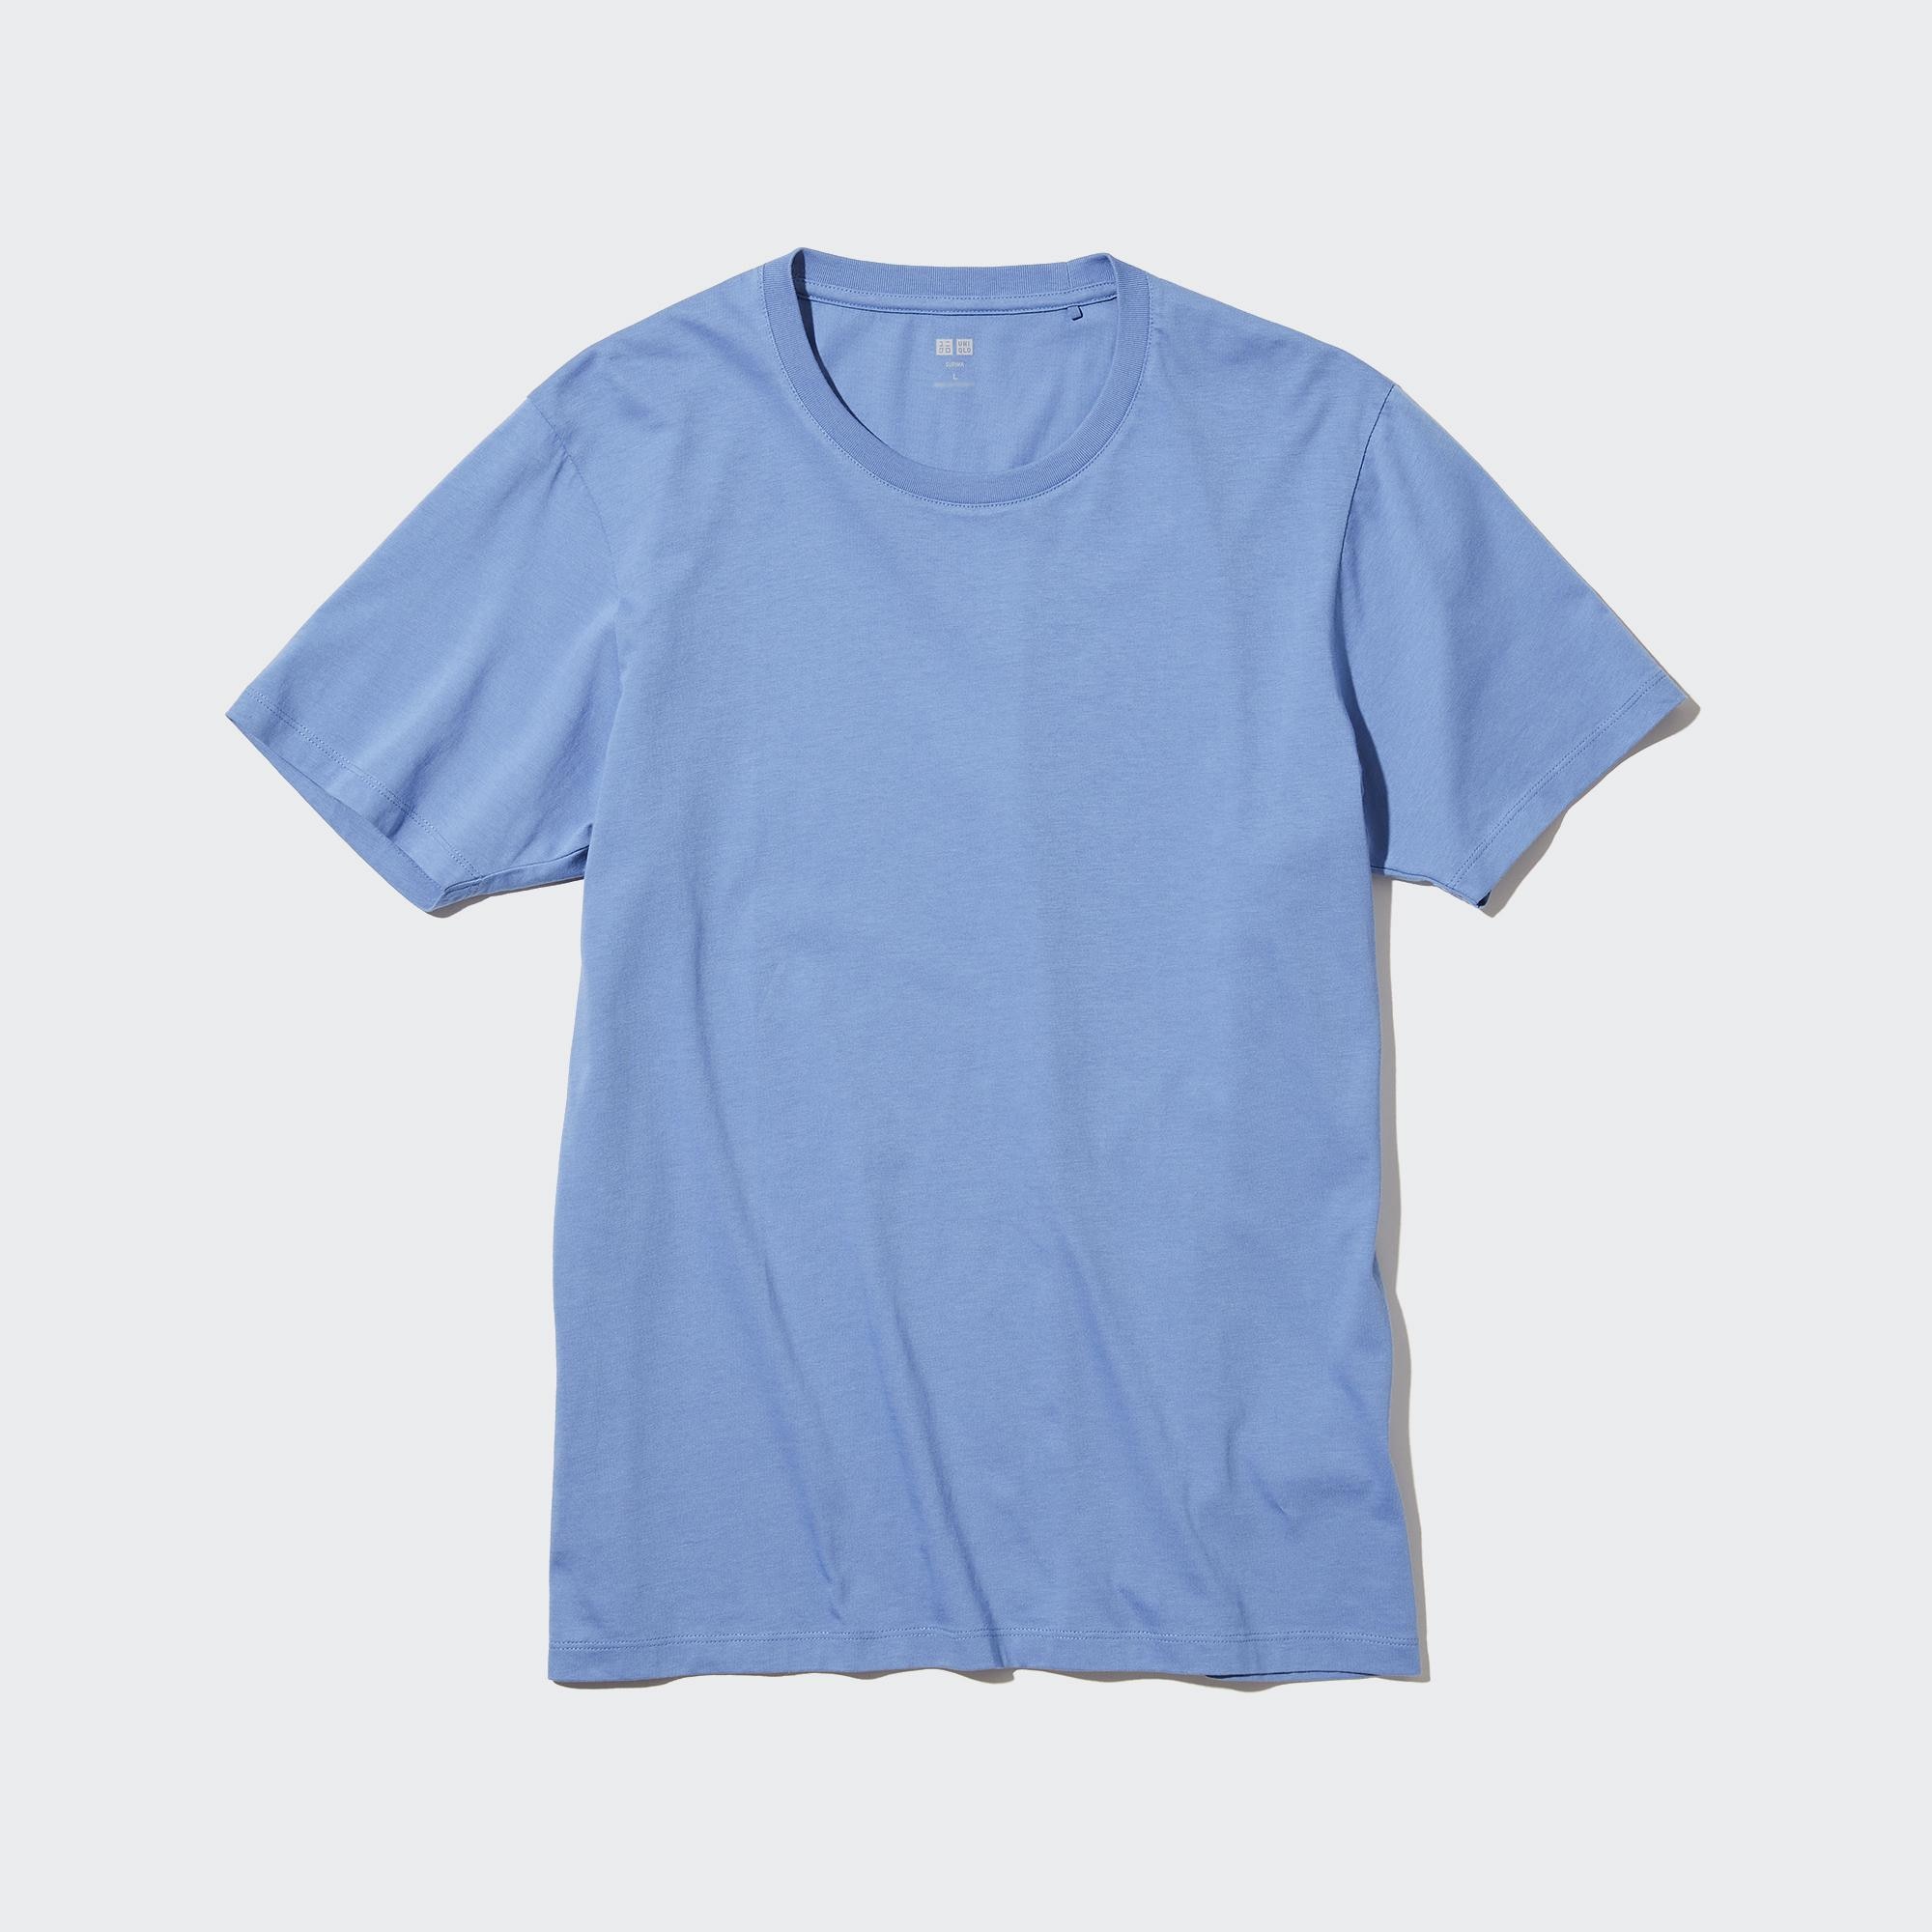 Men's Soft 100% Cotton Medium Weight Crew Neck Short Sleeve T-Shirt, Navy  L, 1 Count, 1 Pack